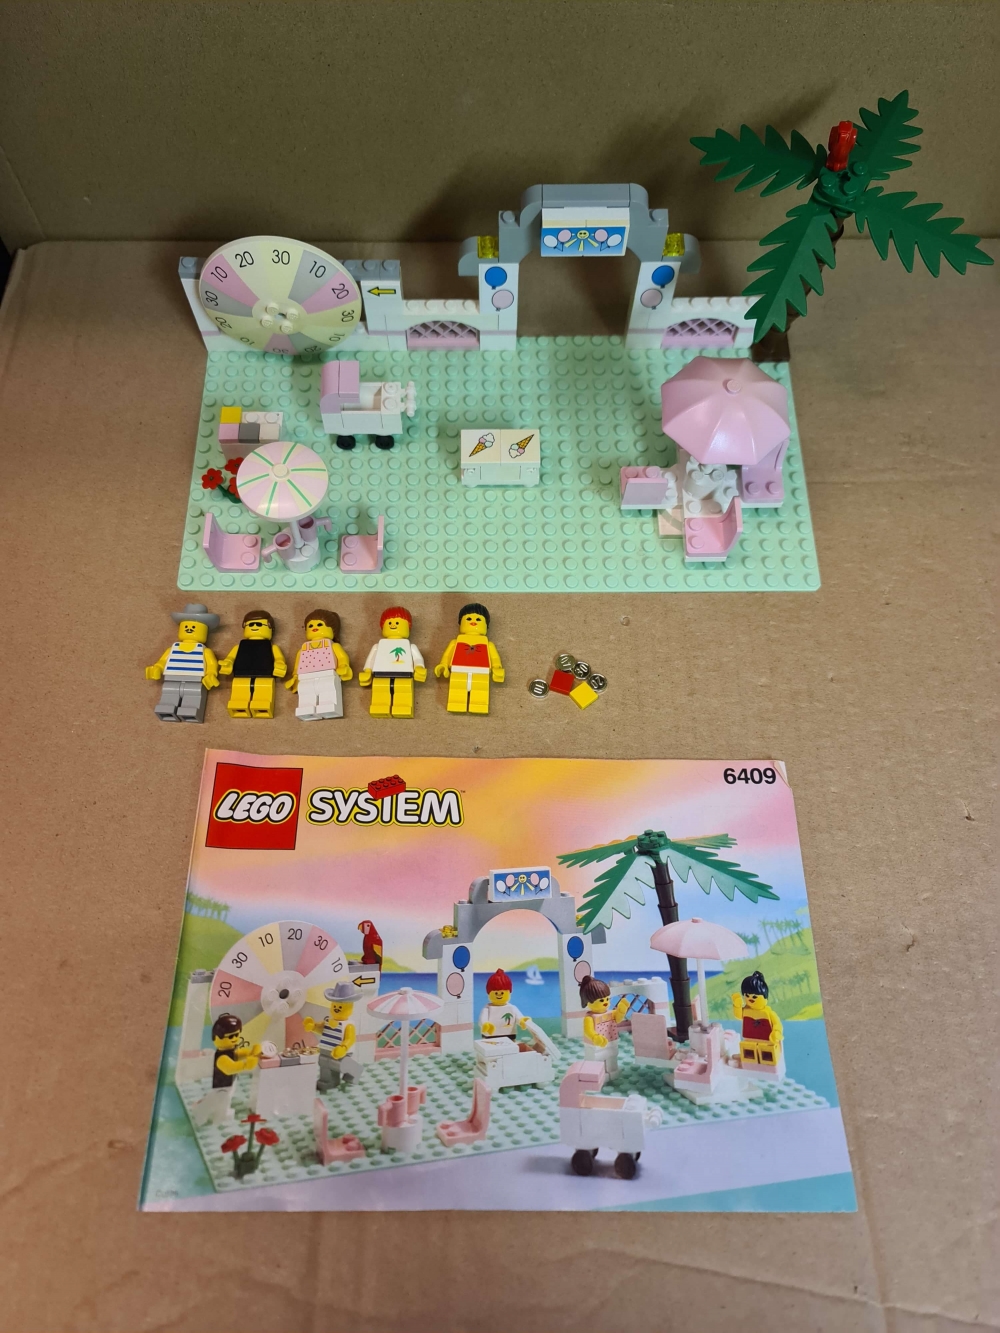 Sett 6409 fra Lego Paradisa serien 
Fint sett. Komplett med manual.